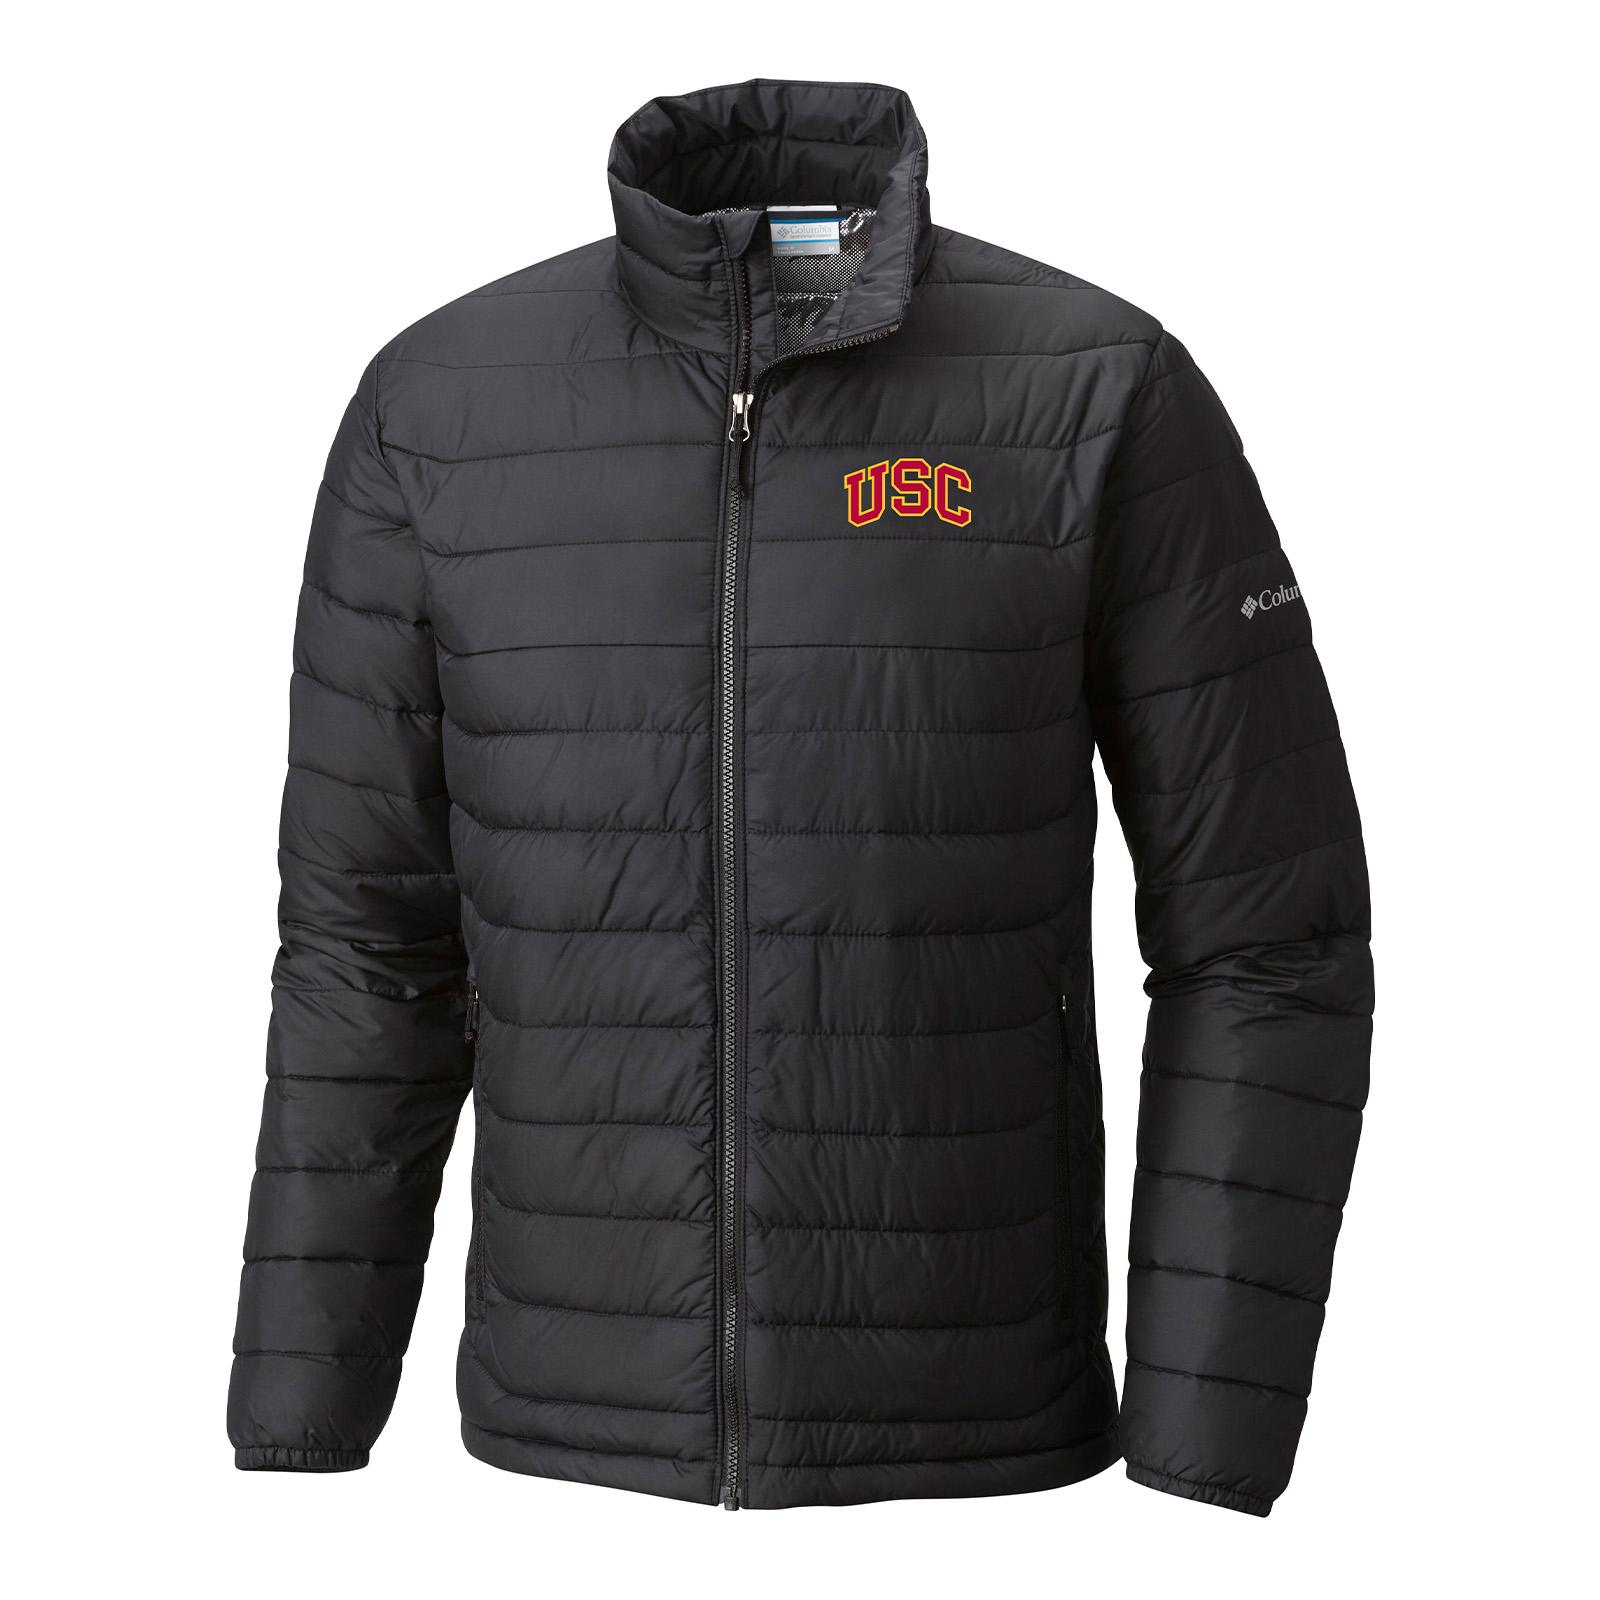 USC Mens Powder Lite Full Zip Jacket image01